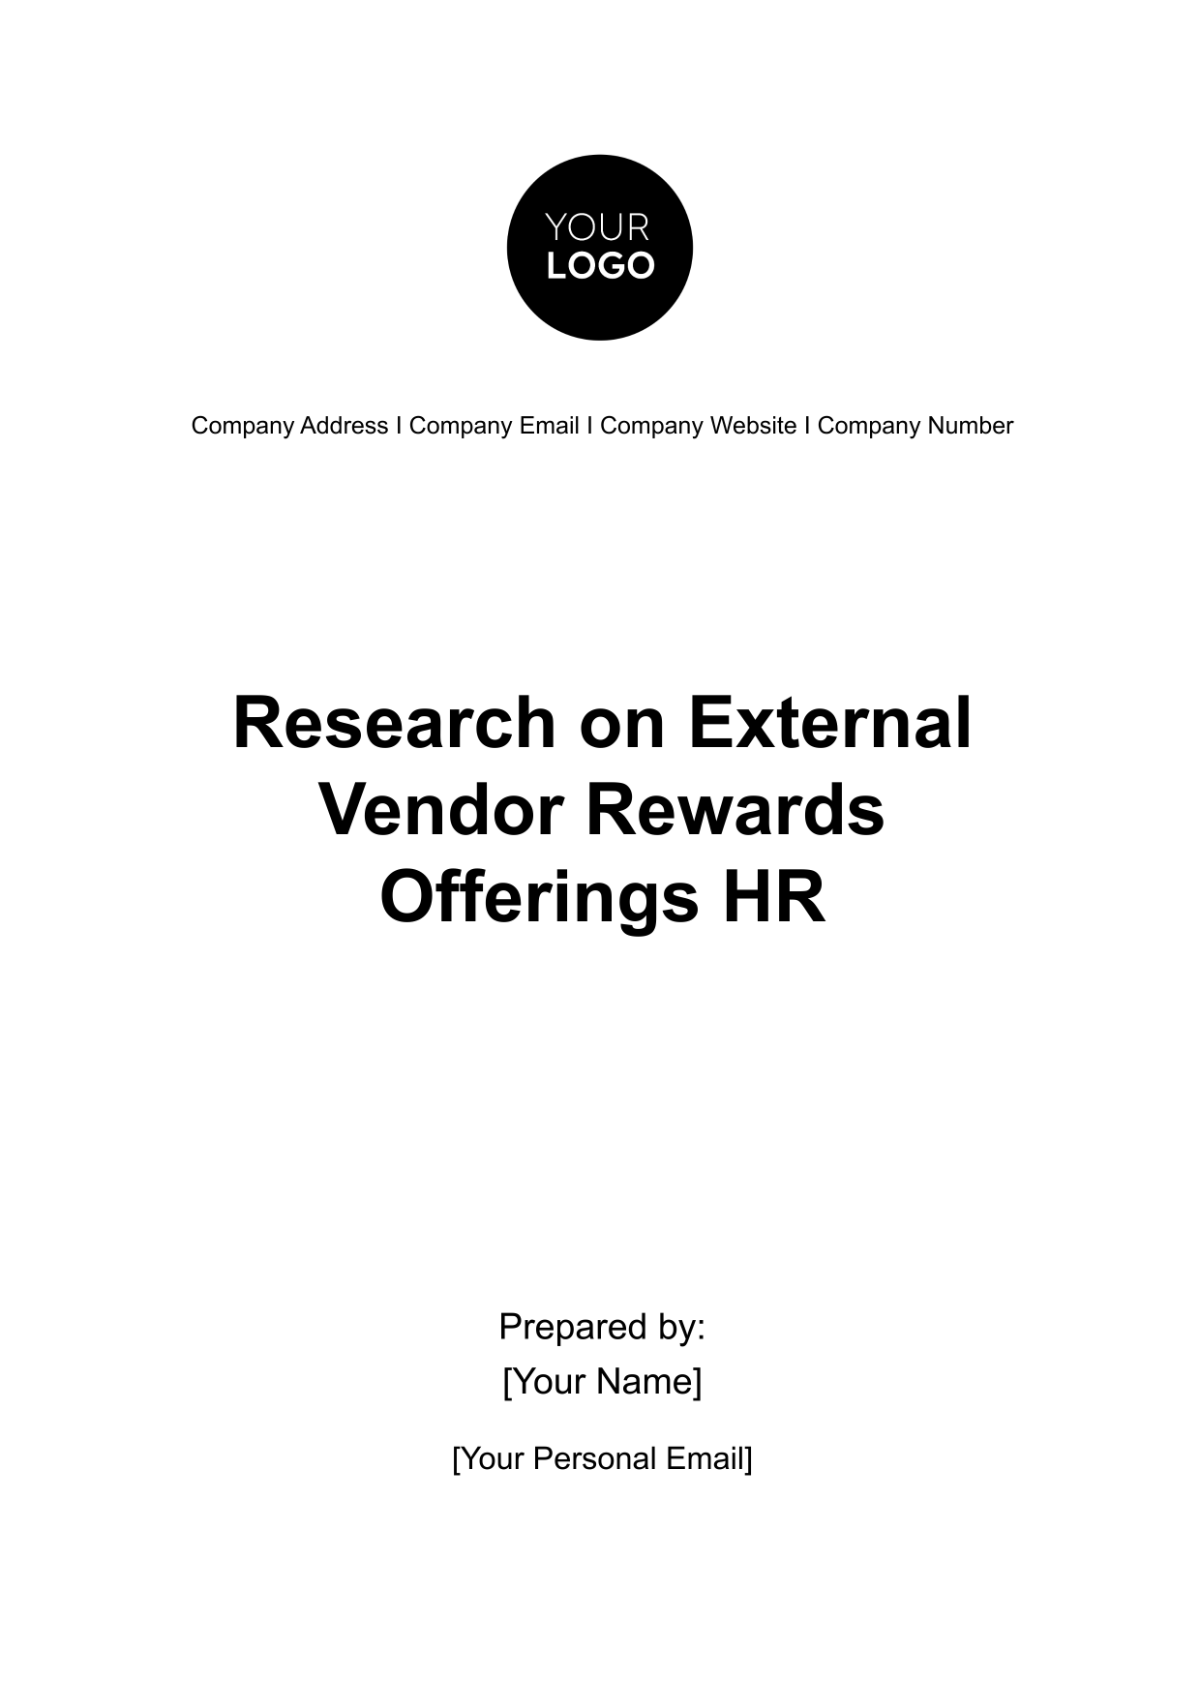 Research on External Vendor Rewards Offerings HR Template